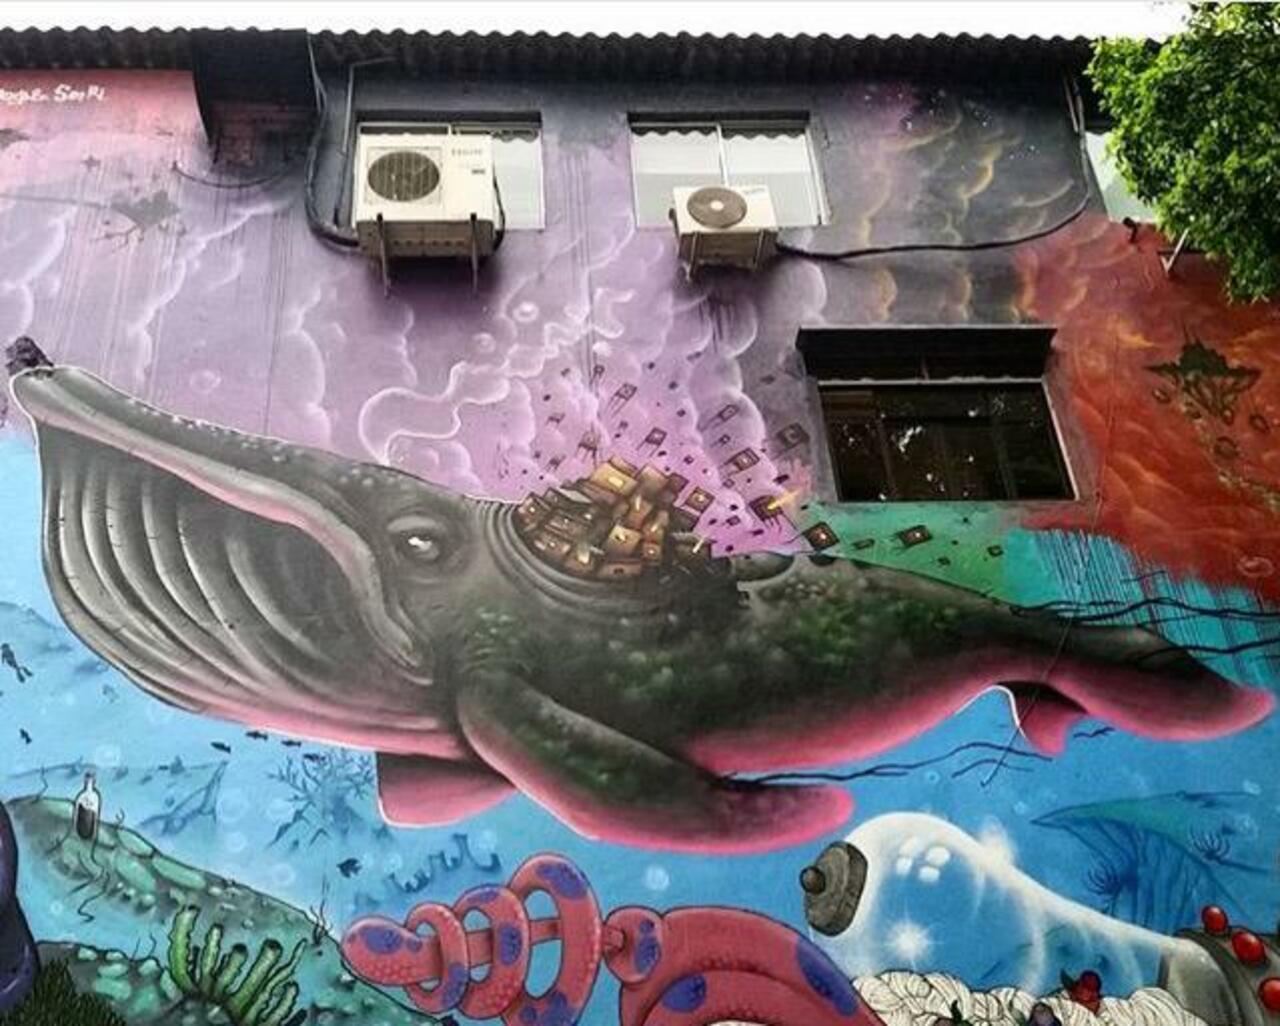 Street Art by joks_johnes Pinheiros, São Paulo 

#art #mural #graffiti #streetart http://t.co/nF068TITgU